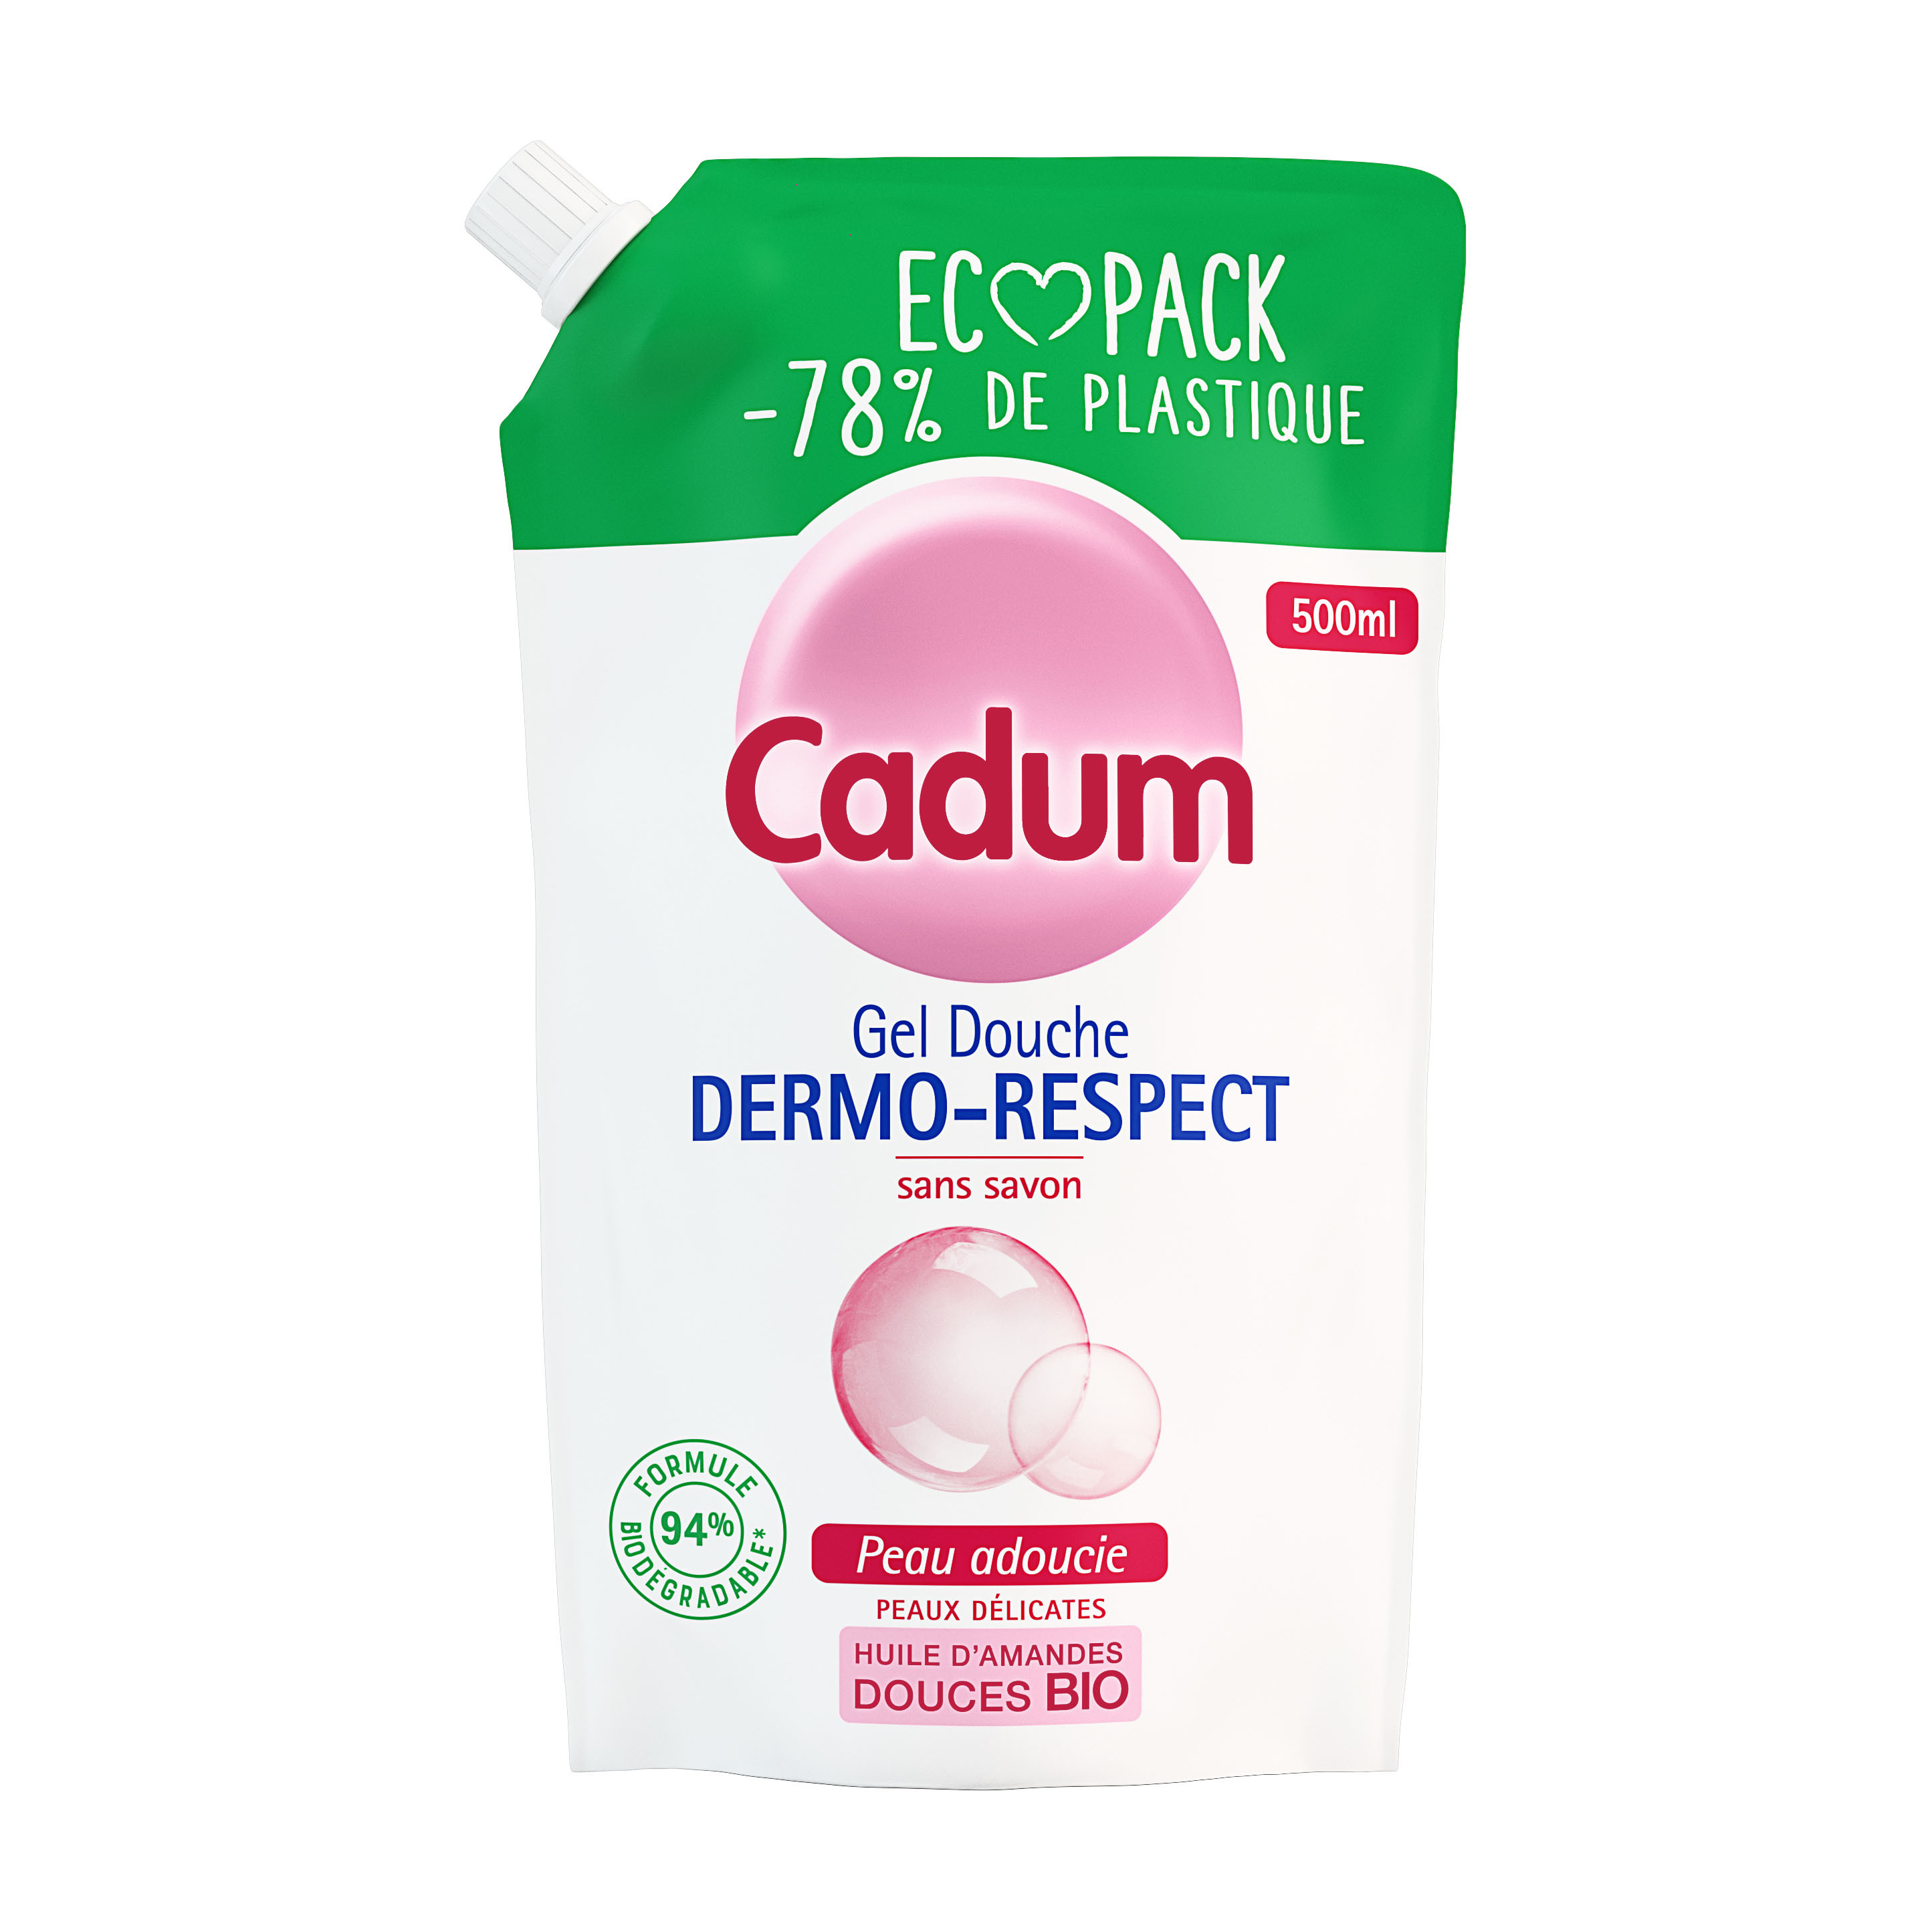 Gel douche Dermo-Respect sans savon 500mL - CADUM - 6CADOU500 